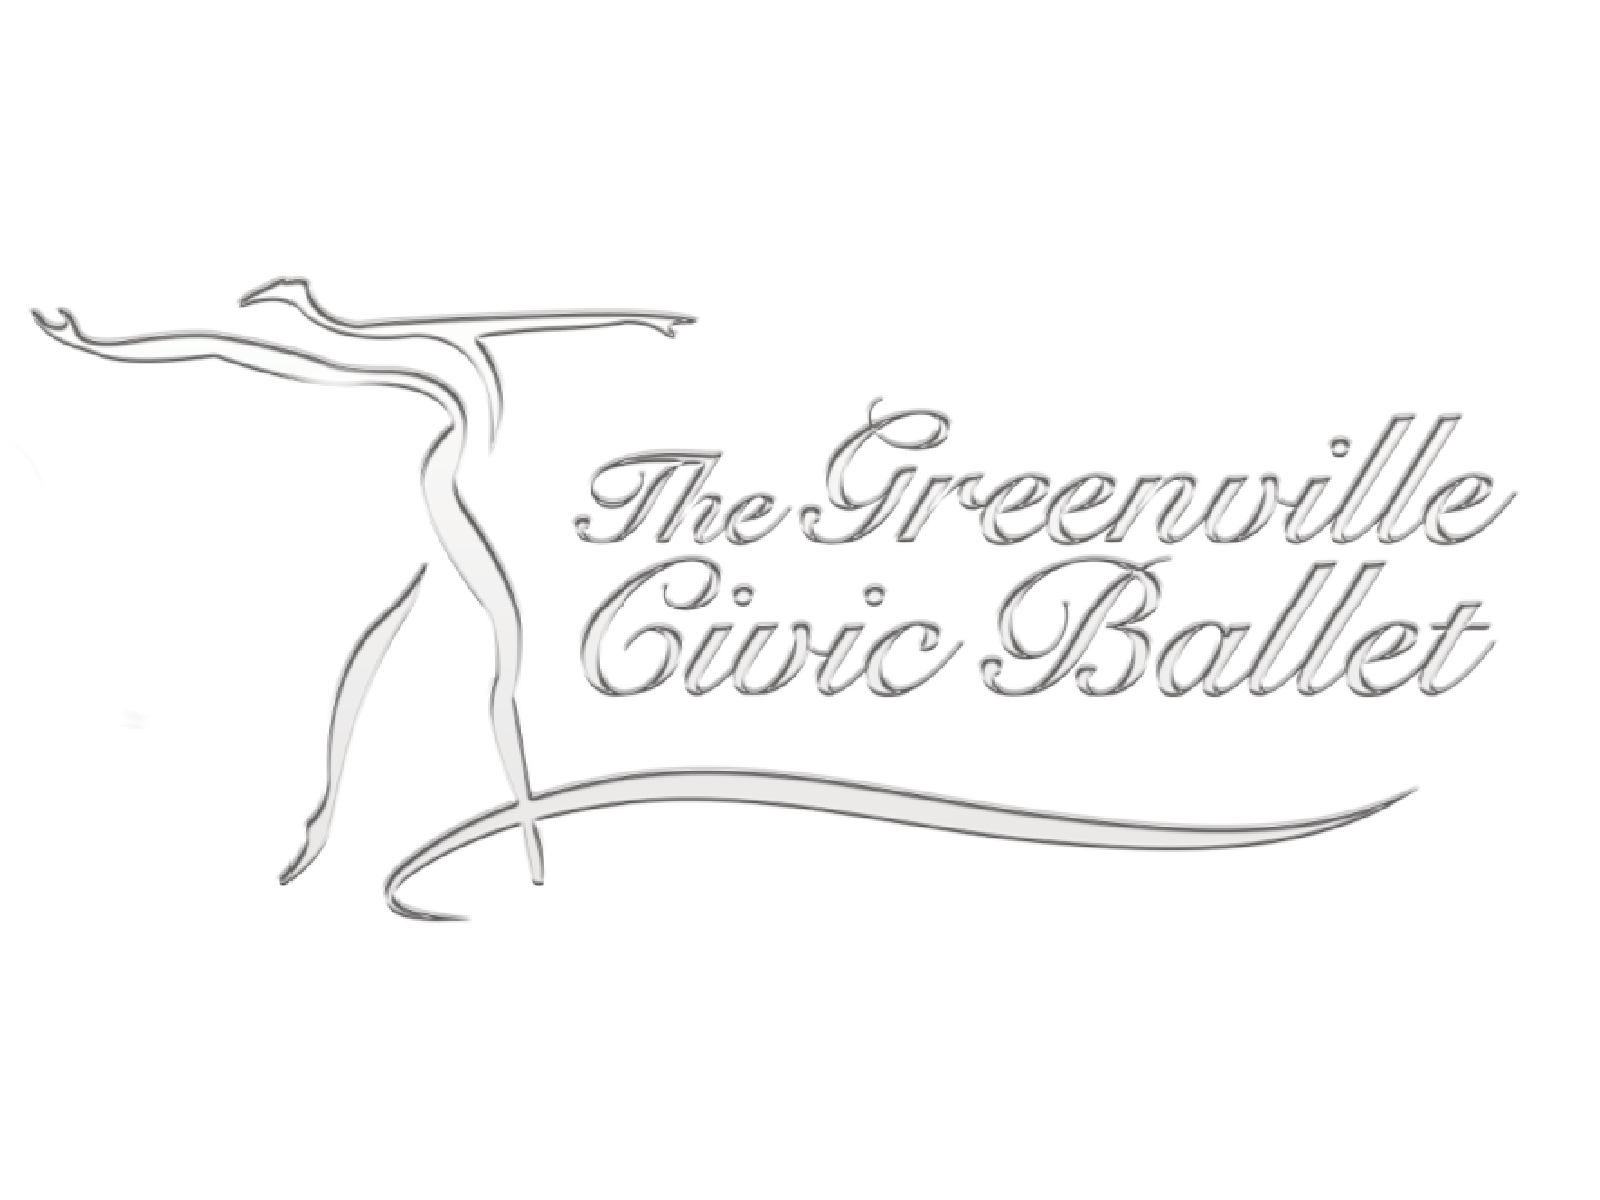 Greenville Civic Ballet 25th Anniversary Logo